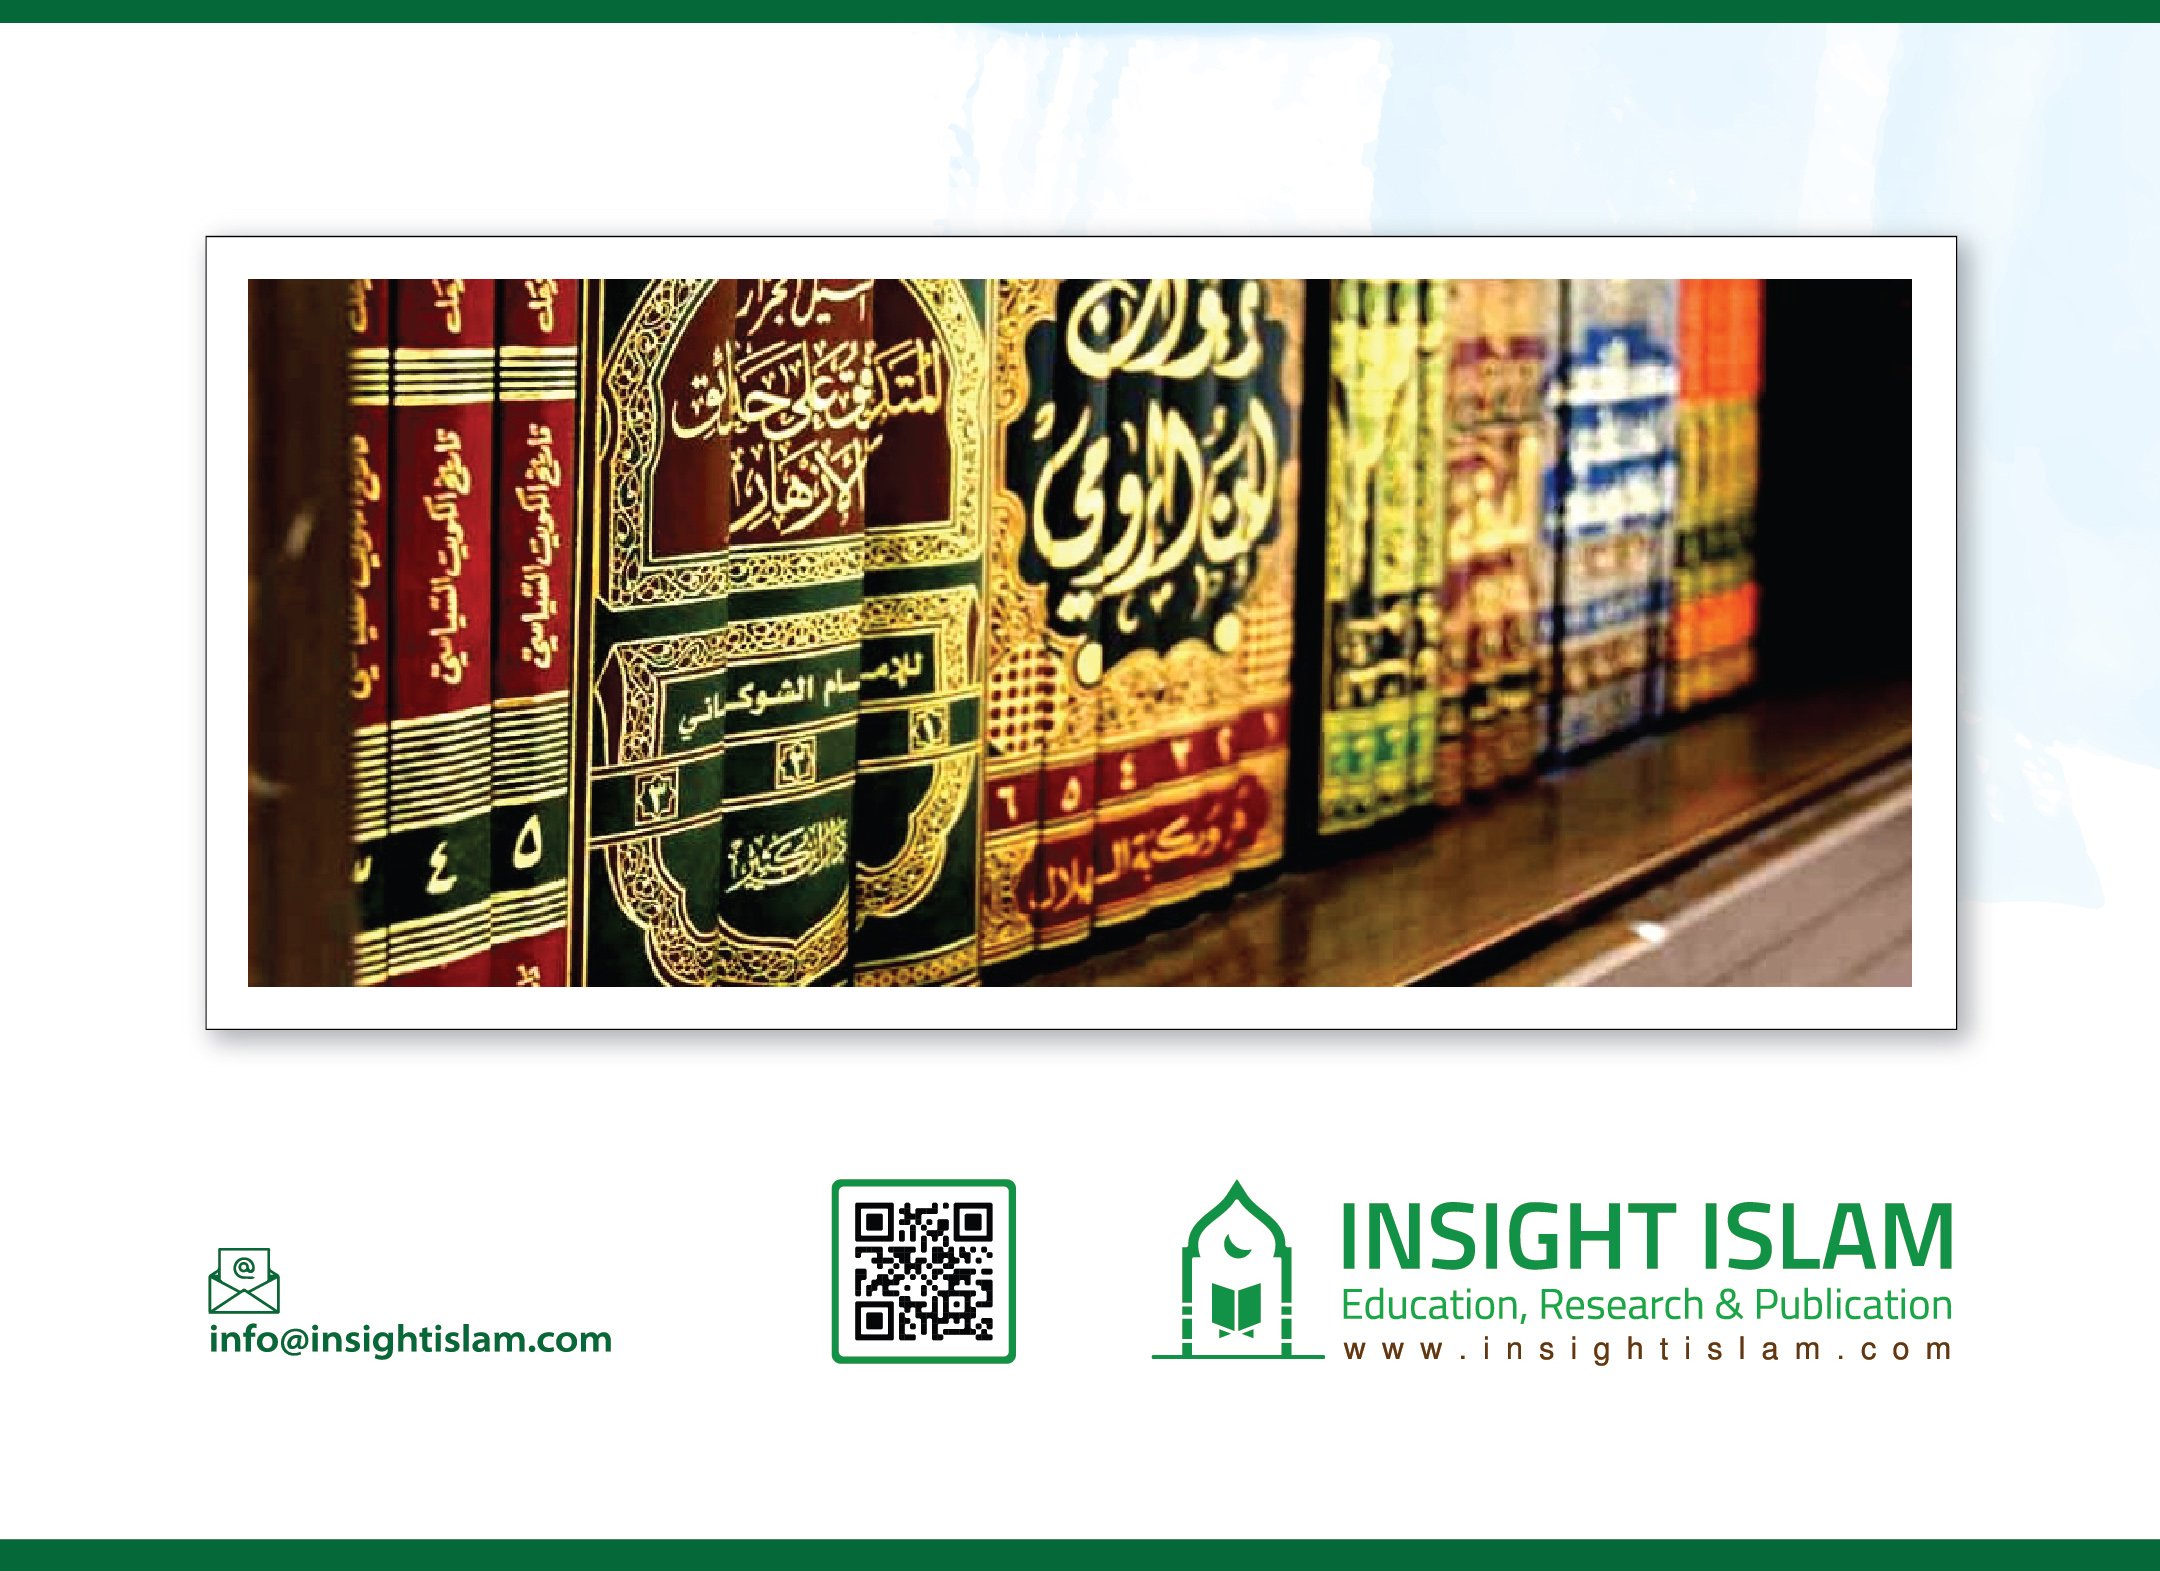 Insight Islam Sticker 7.2X9.5-01 copy